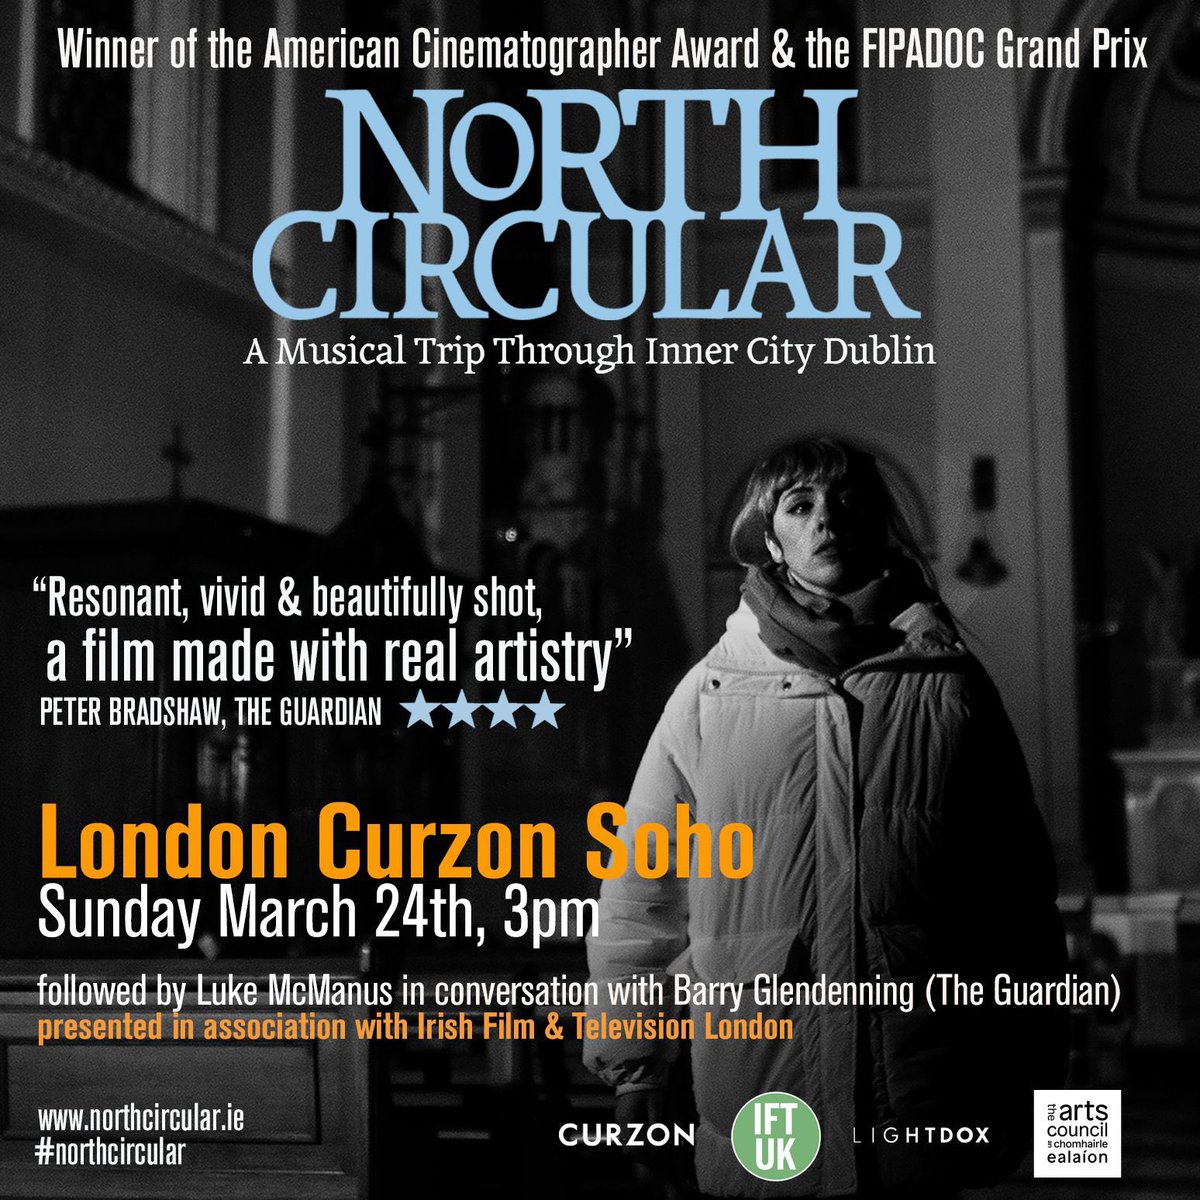 “Resonant, vivid & beautifully shot” @northcircular_ from director Luke McManus screens at @CurzonSoho this Sunday! Plus Q&A with @lukemcmanus